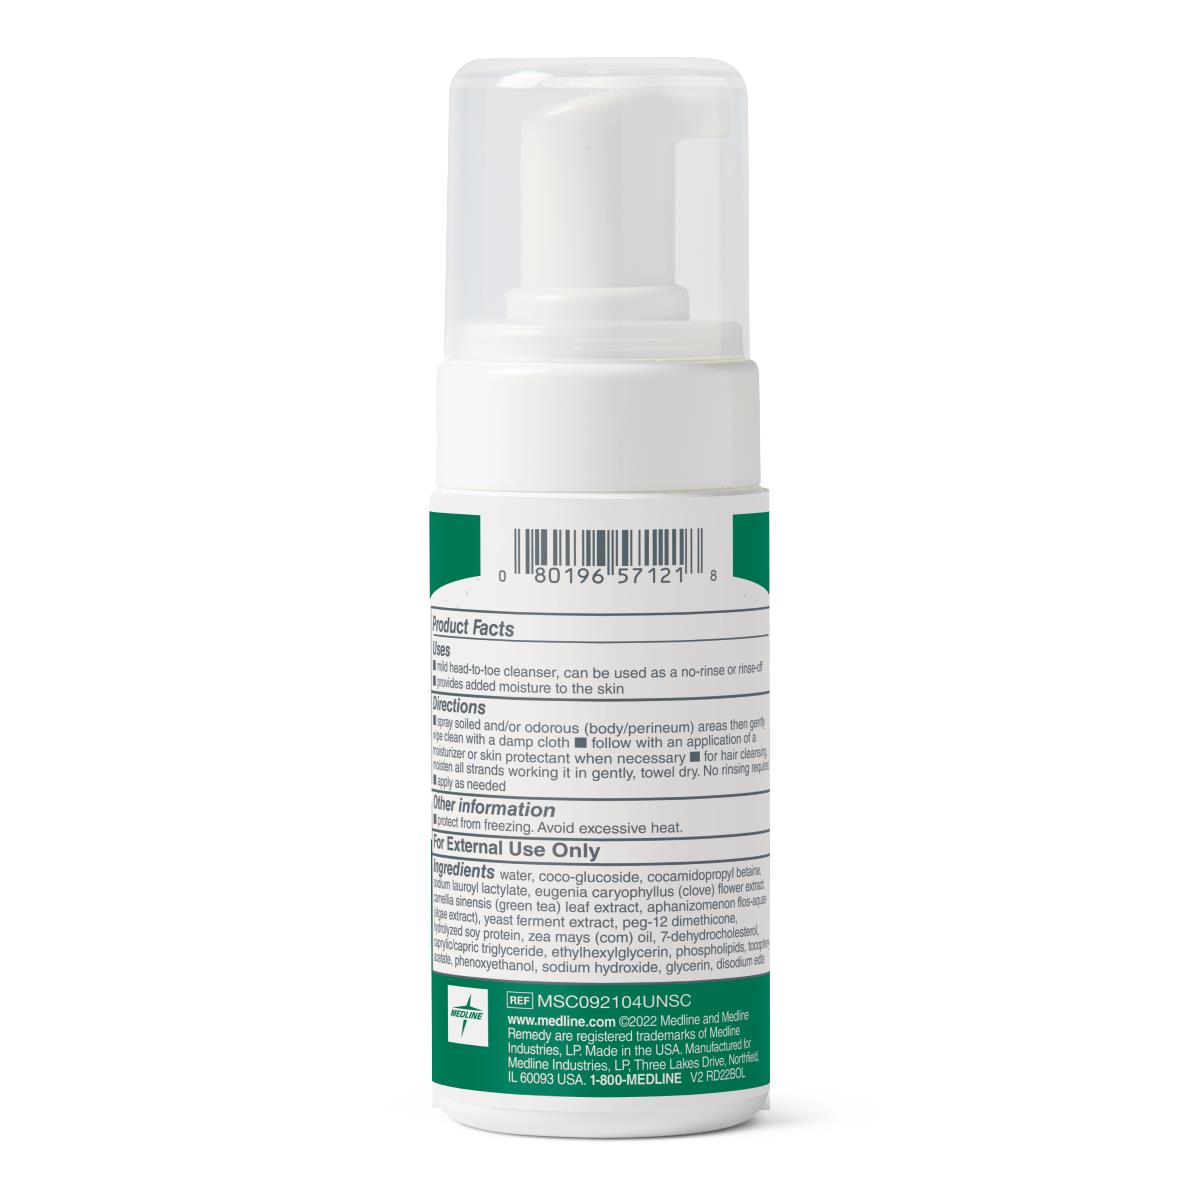 Medline Remedy Clinical No-Rinse Foam Cleanser